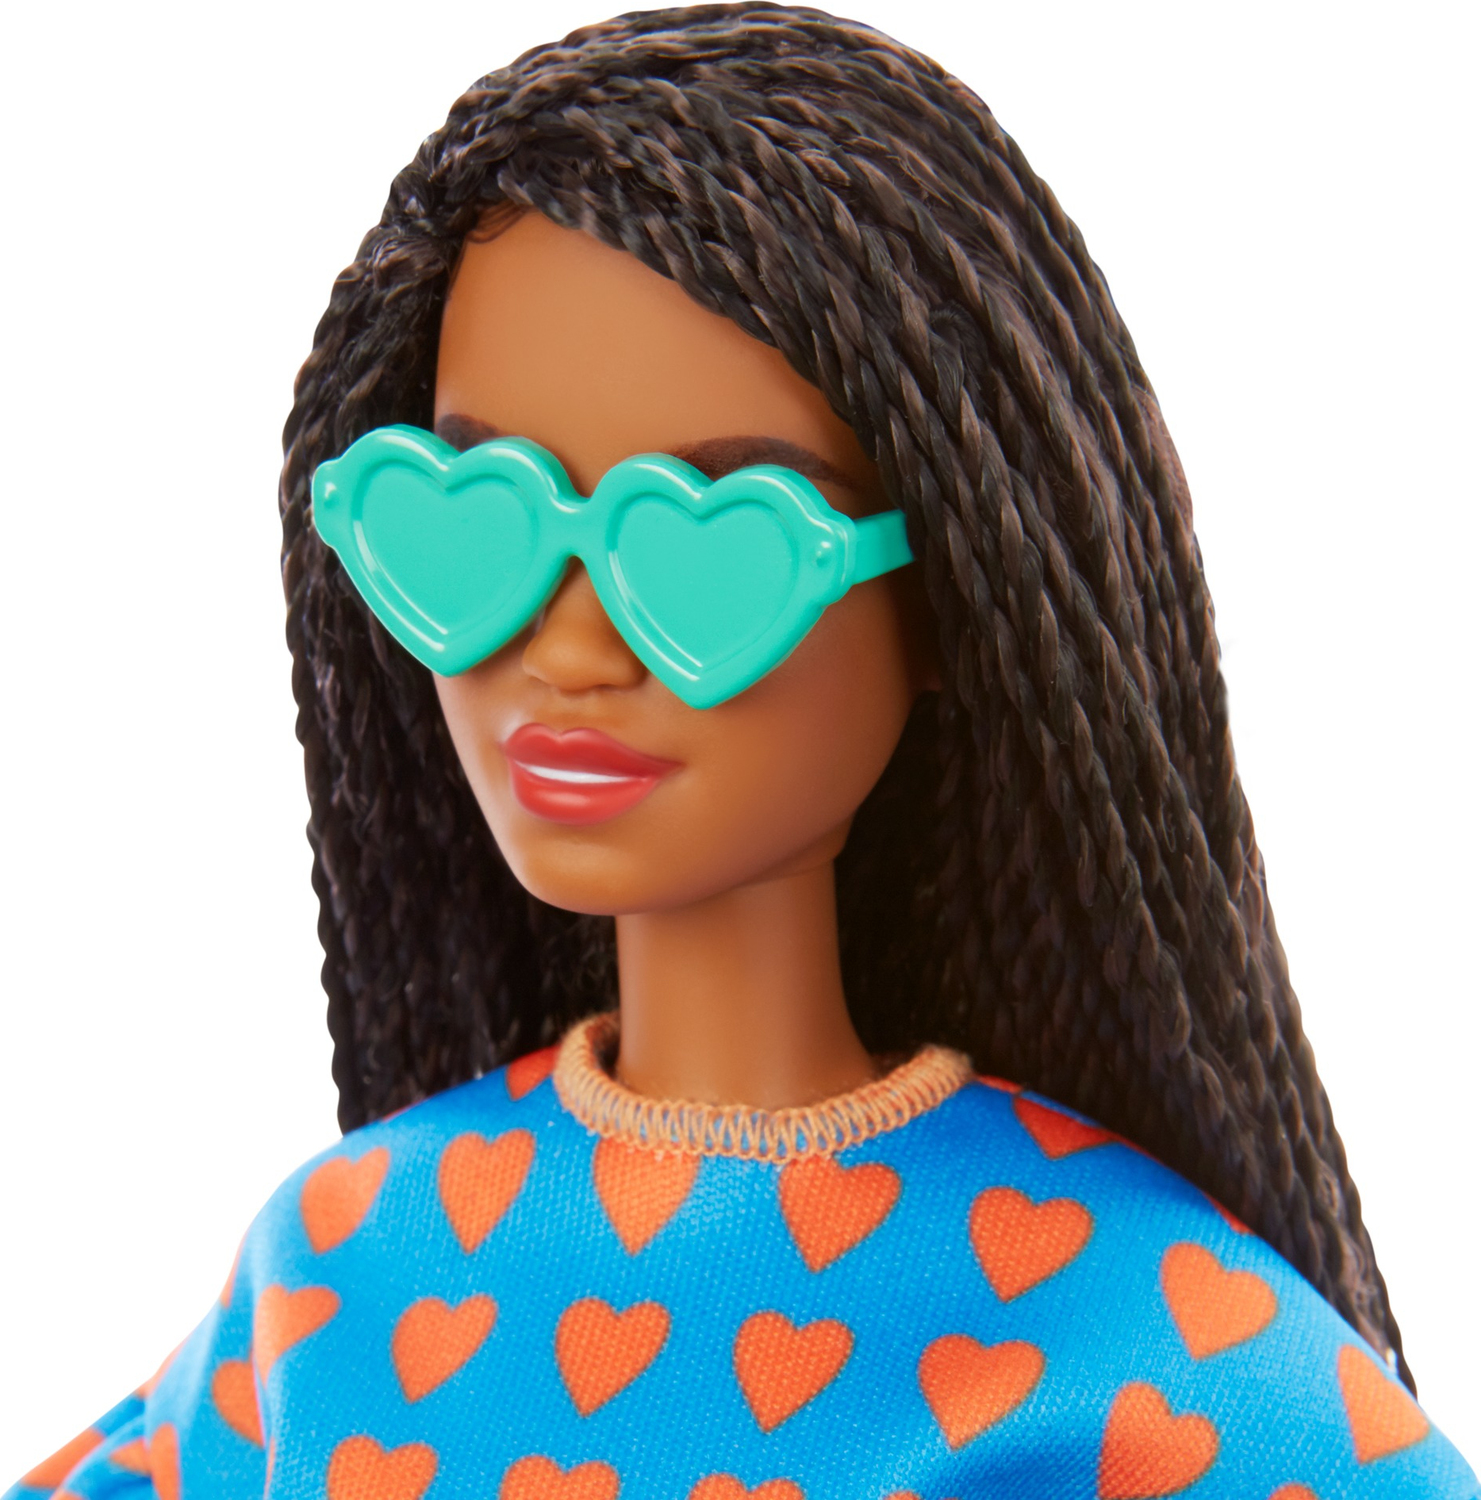 Barbie Fashionistas Doll #172 - The Toy Box Hanover